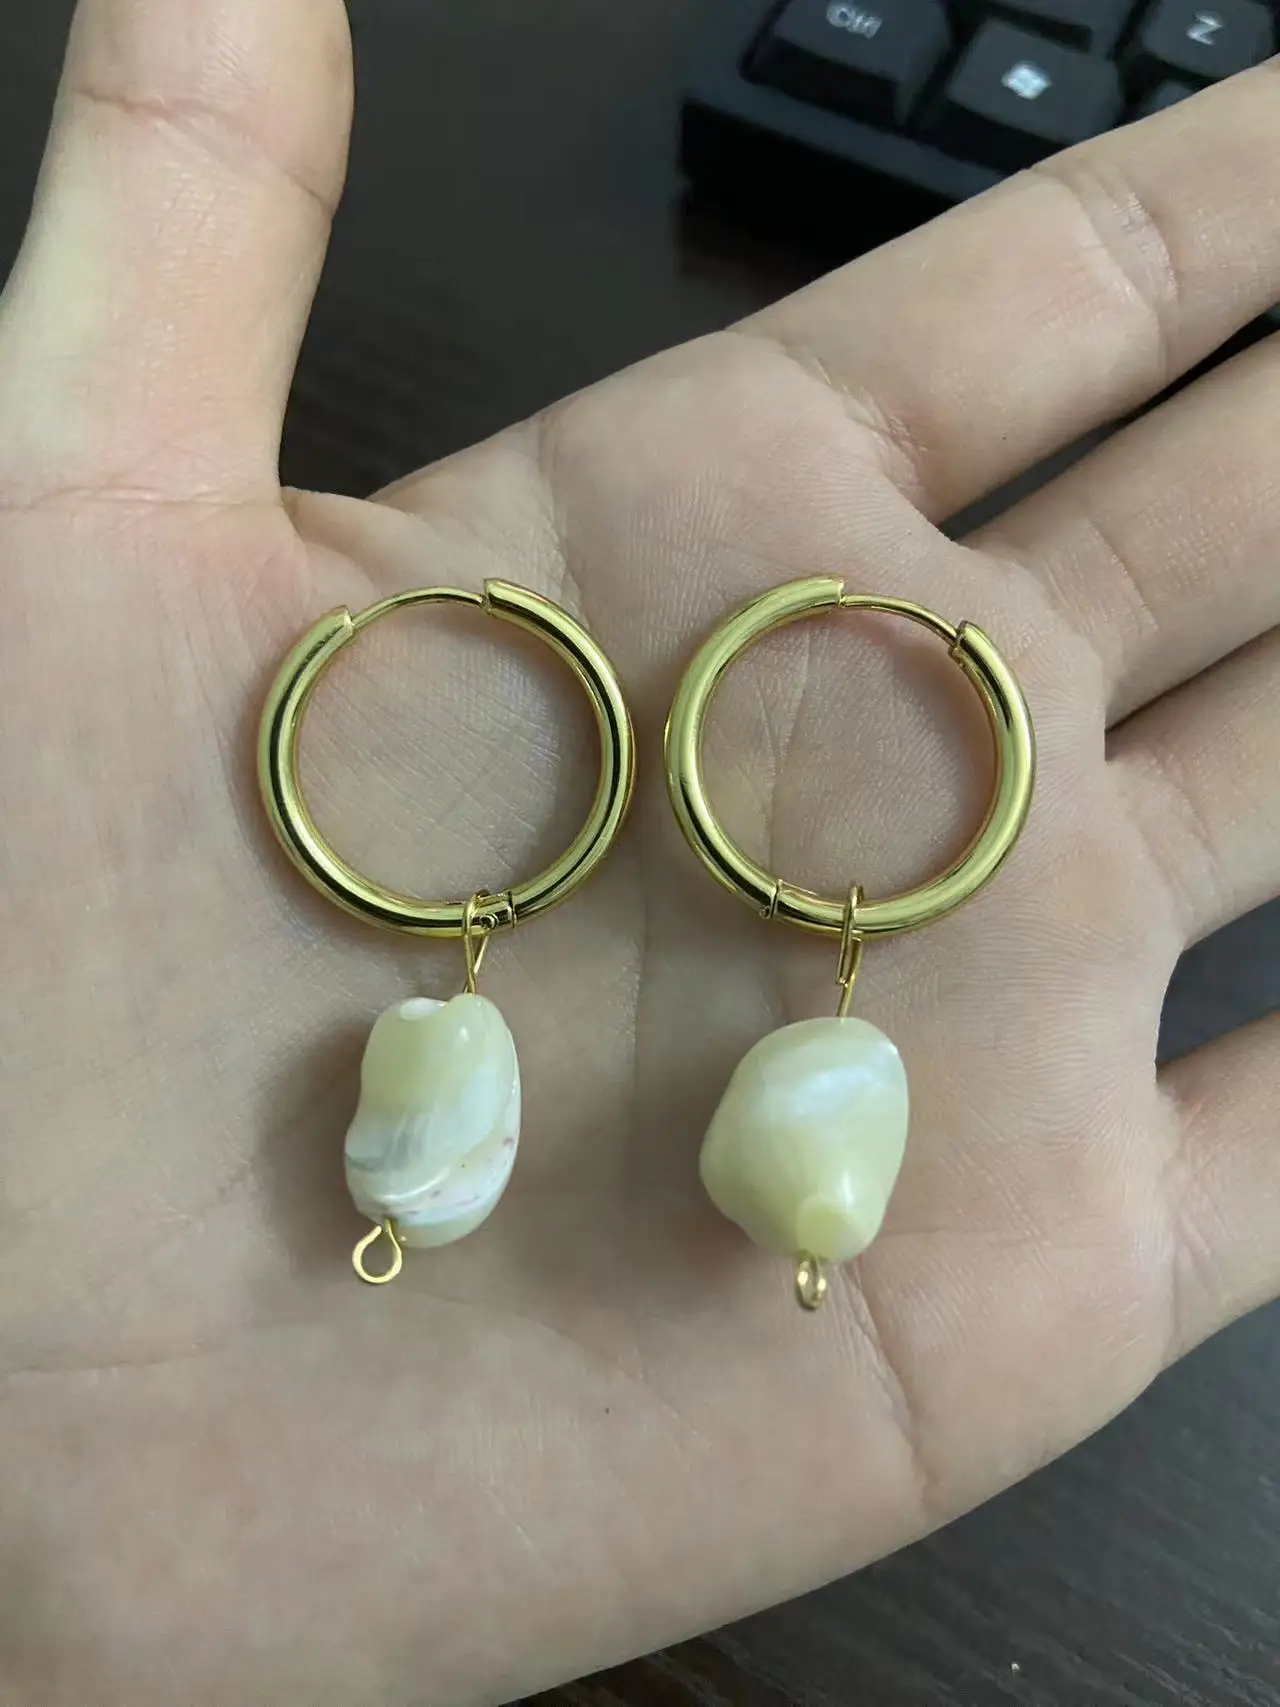 

2022 New Cute Pearl Studs Hoop Earrings for Women Gold Color Eardrop Minimalist Tiny Huggies Hoops Wedding Fashion Jewelry